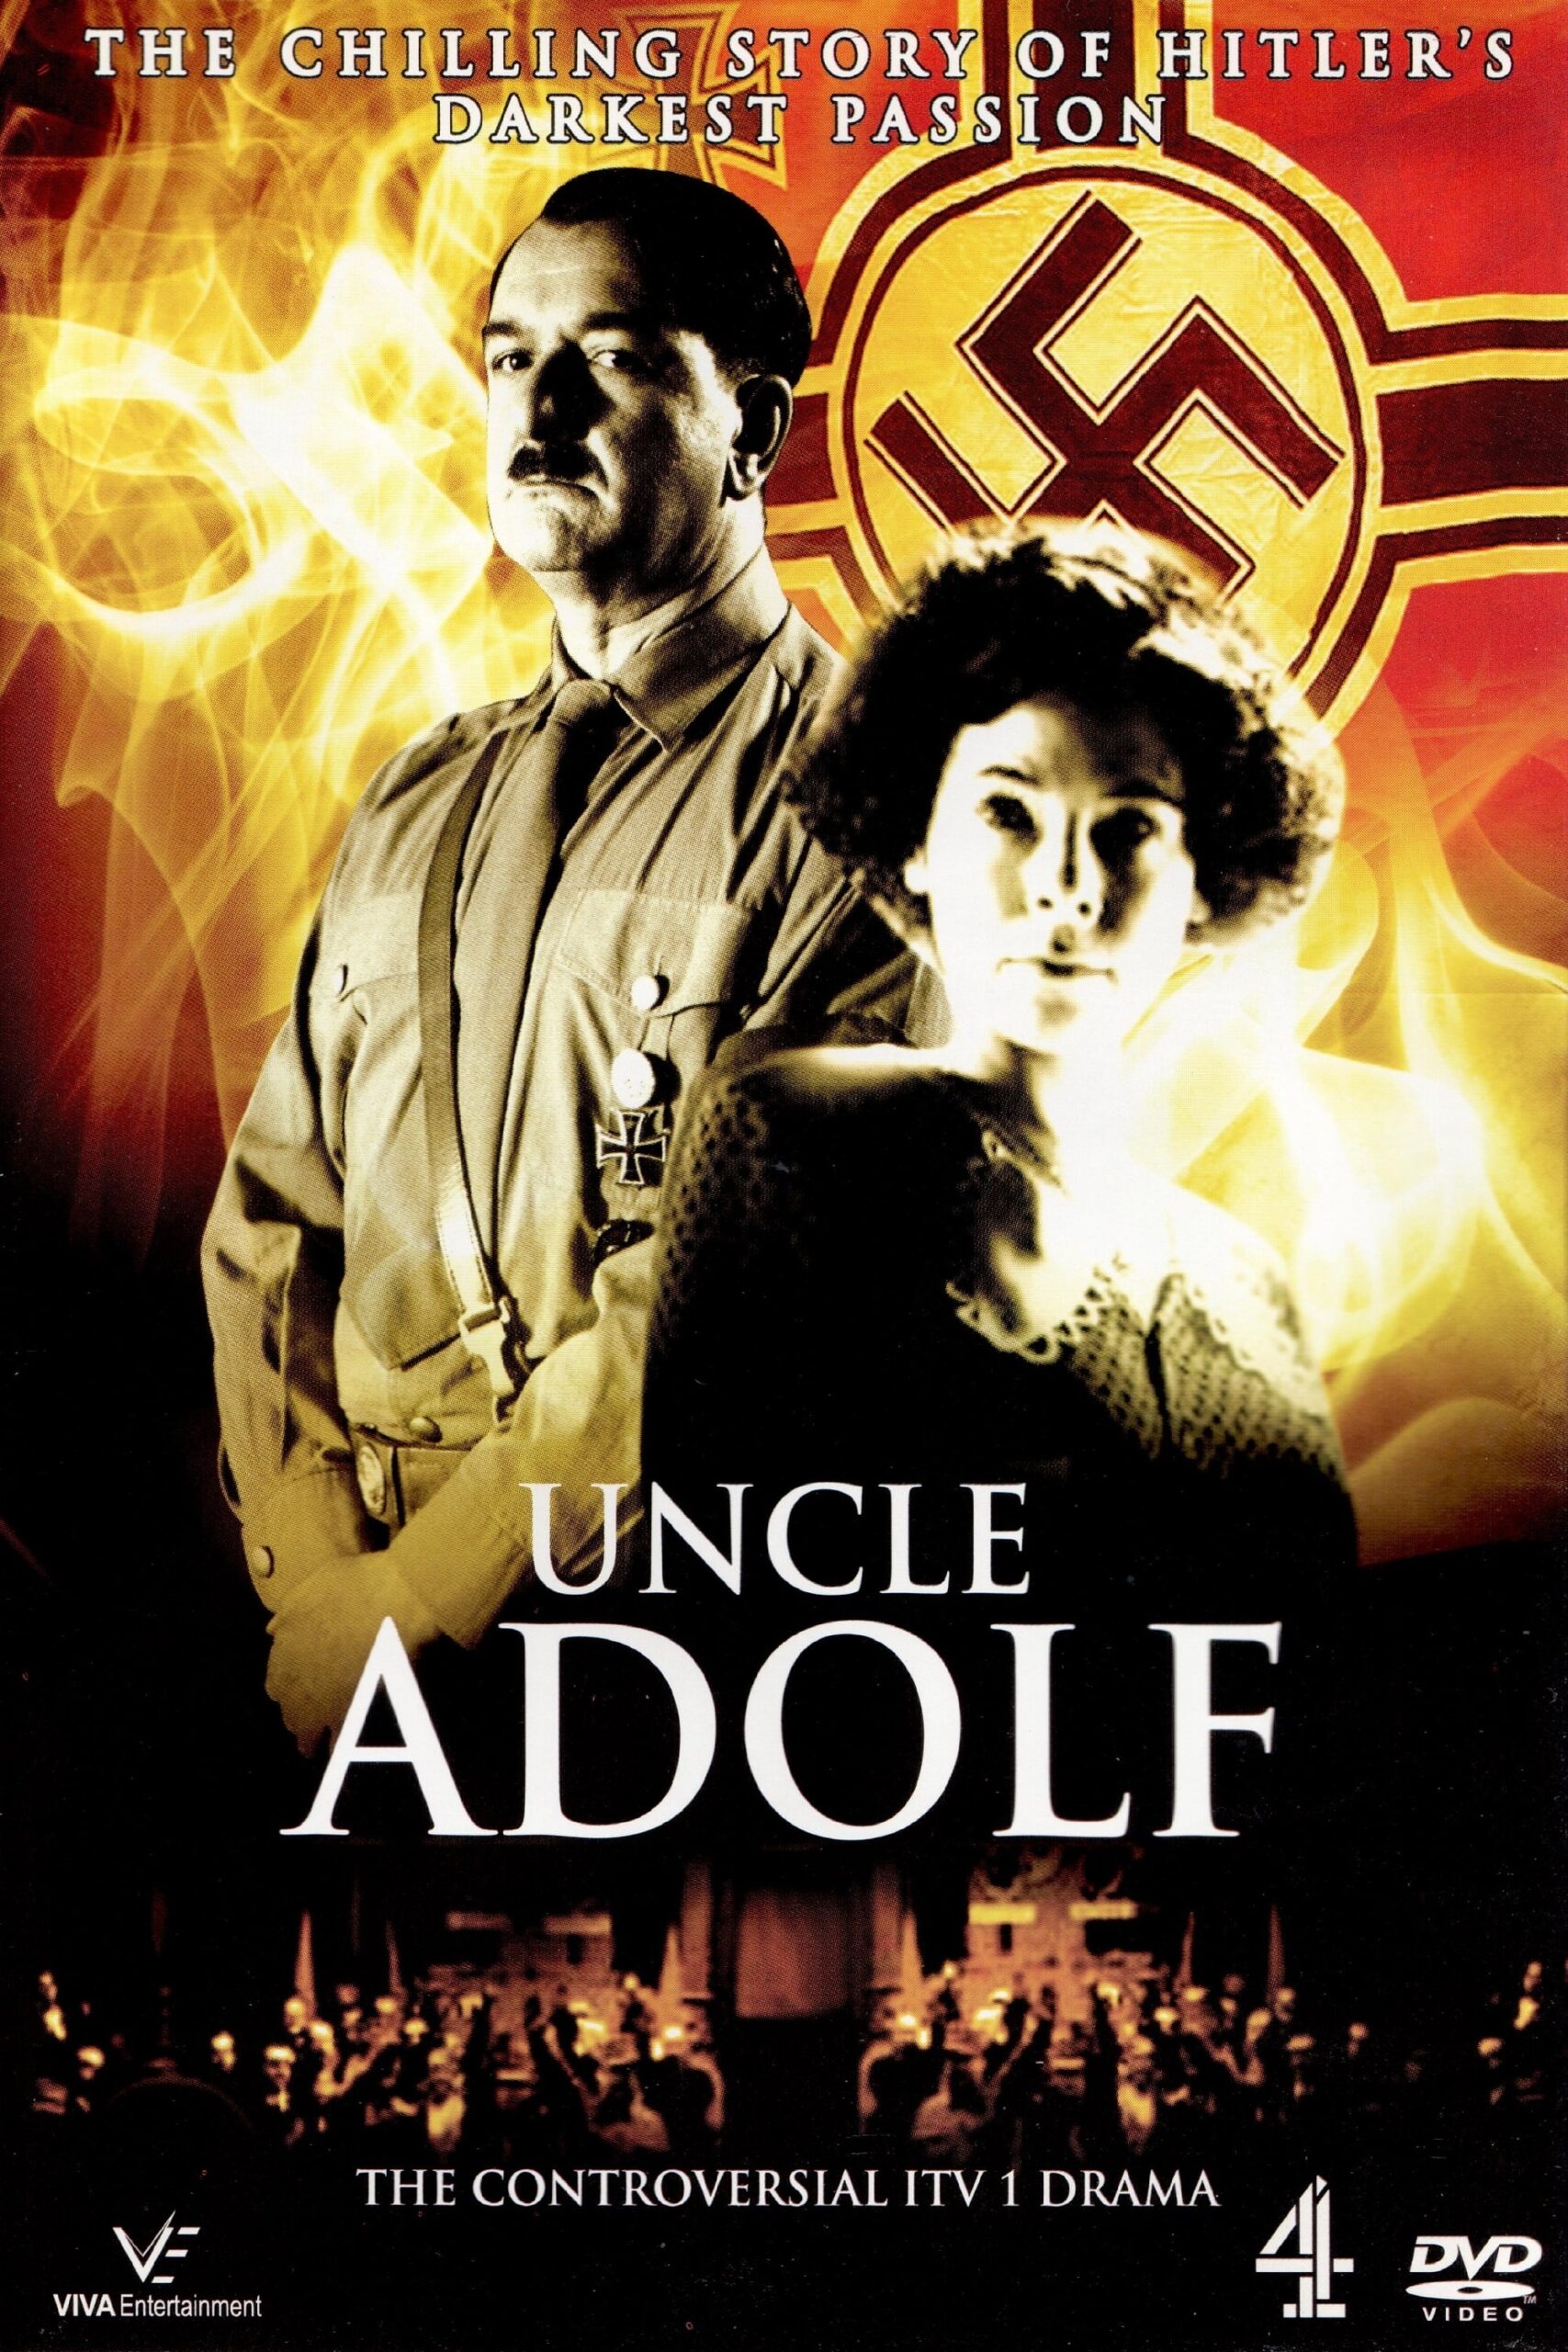 Uncle Adolf